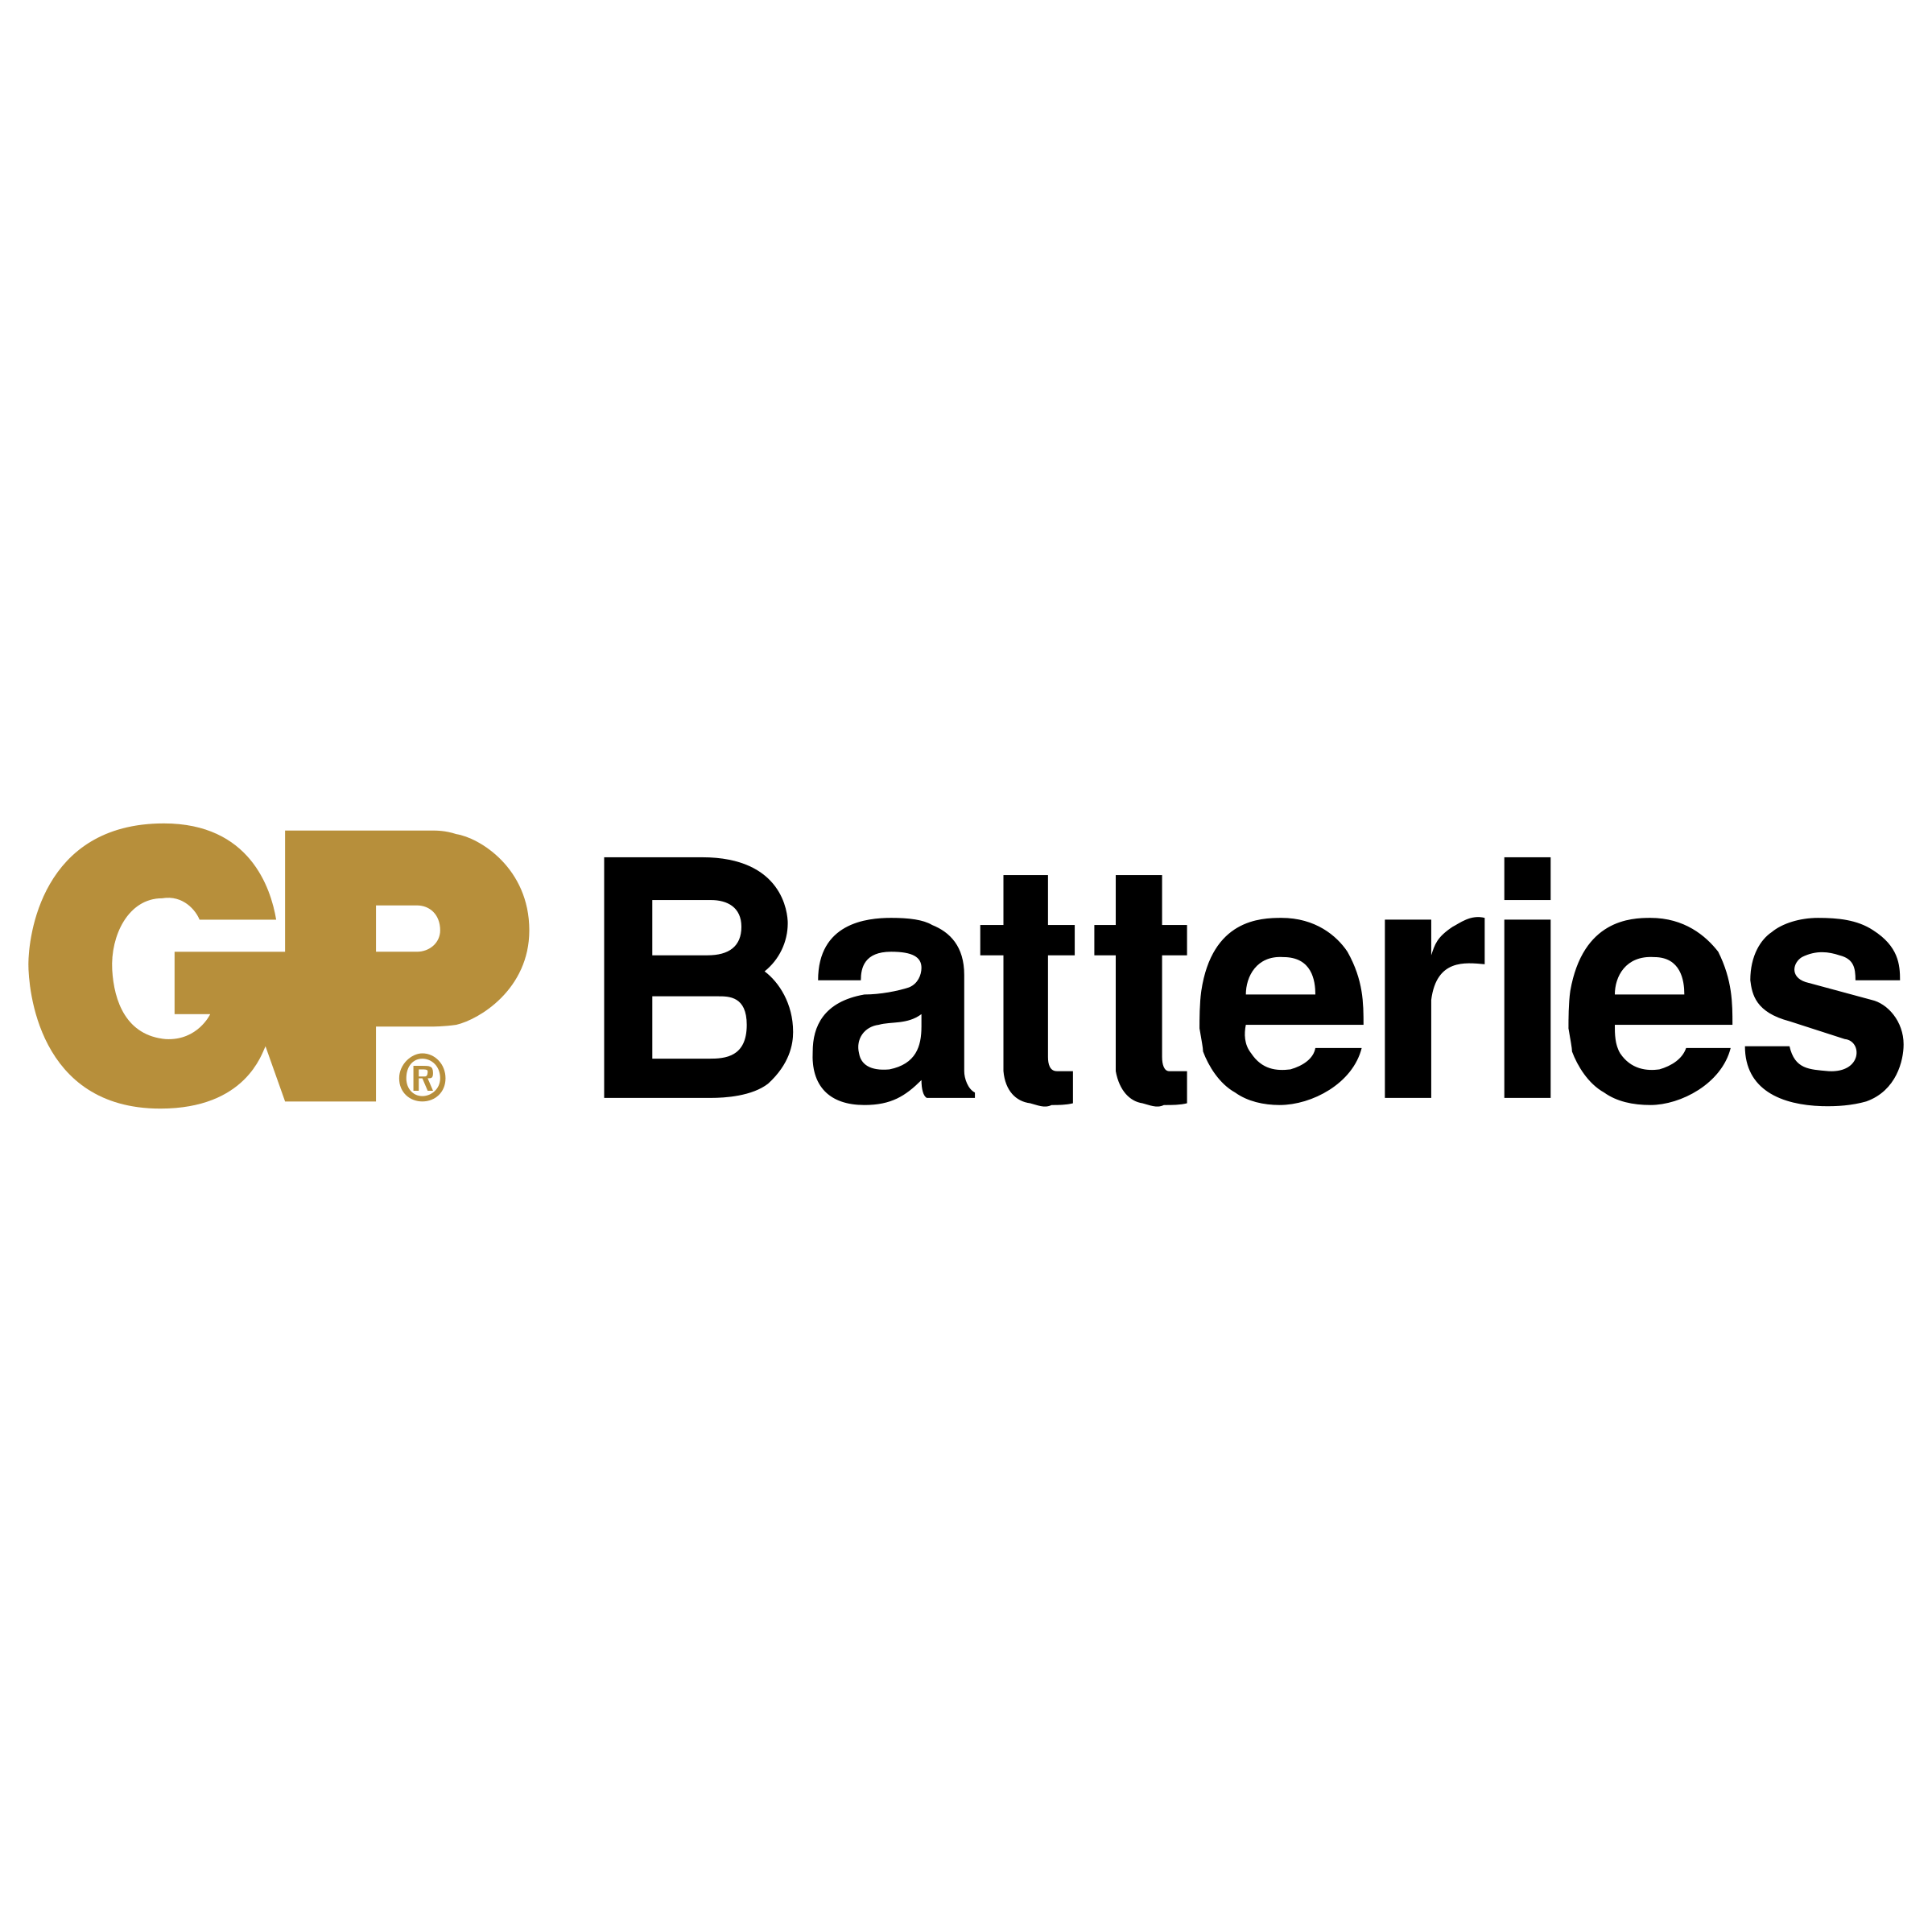 Batteries.com Logo - GP Batteries Logo PNG Transparent & SVG Vector - Freebie Supply